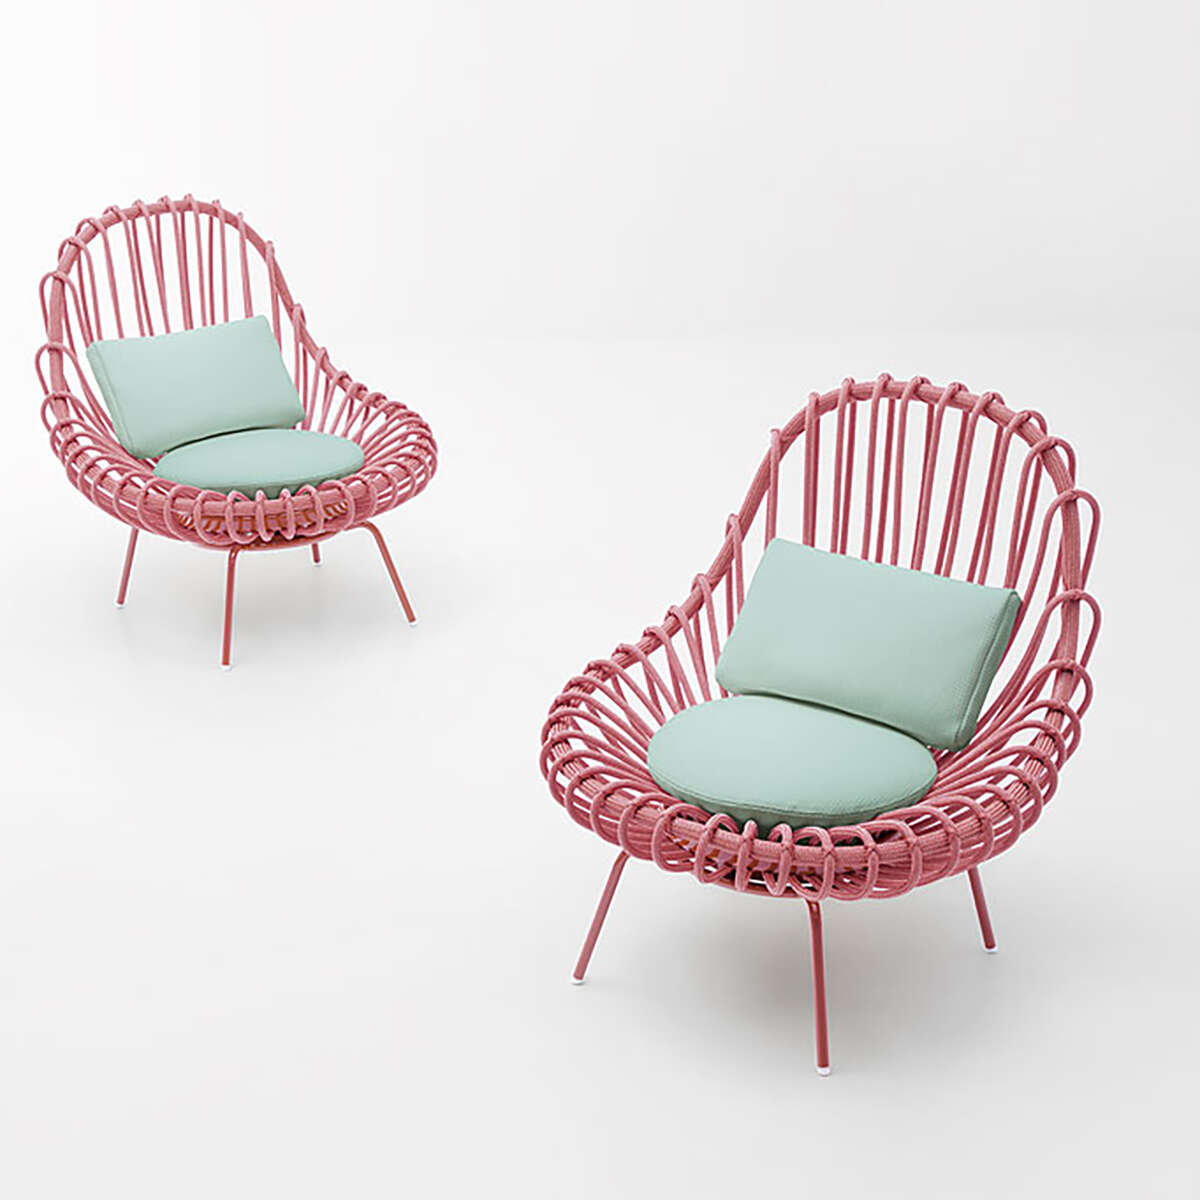 Paola Lenti Modern Garden Co Guinco chair pink